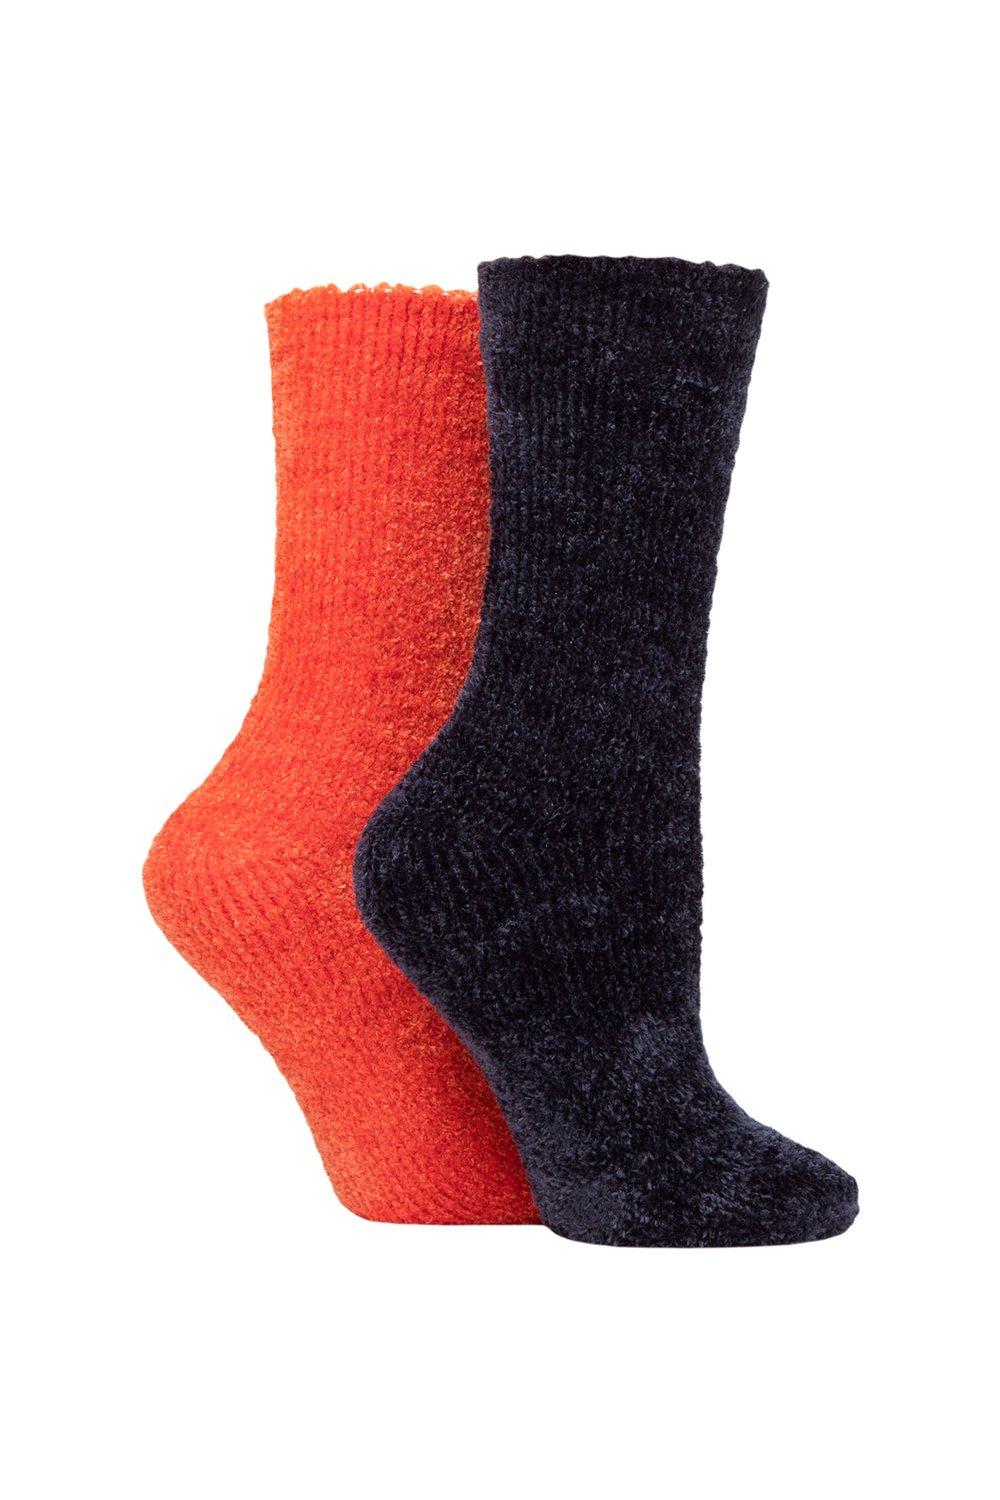 2 Pair Chenille Leisure Socks